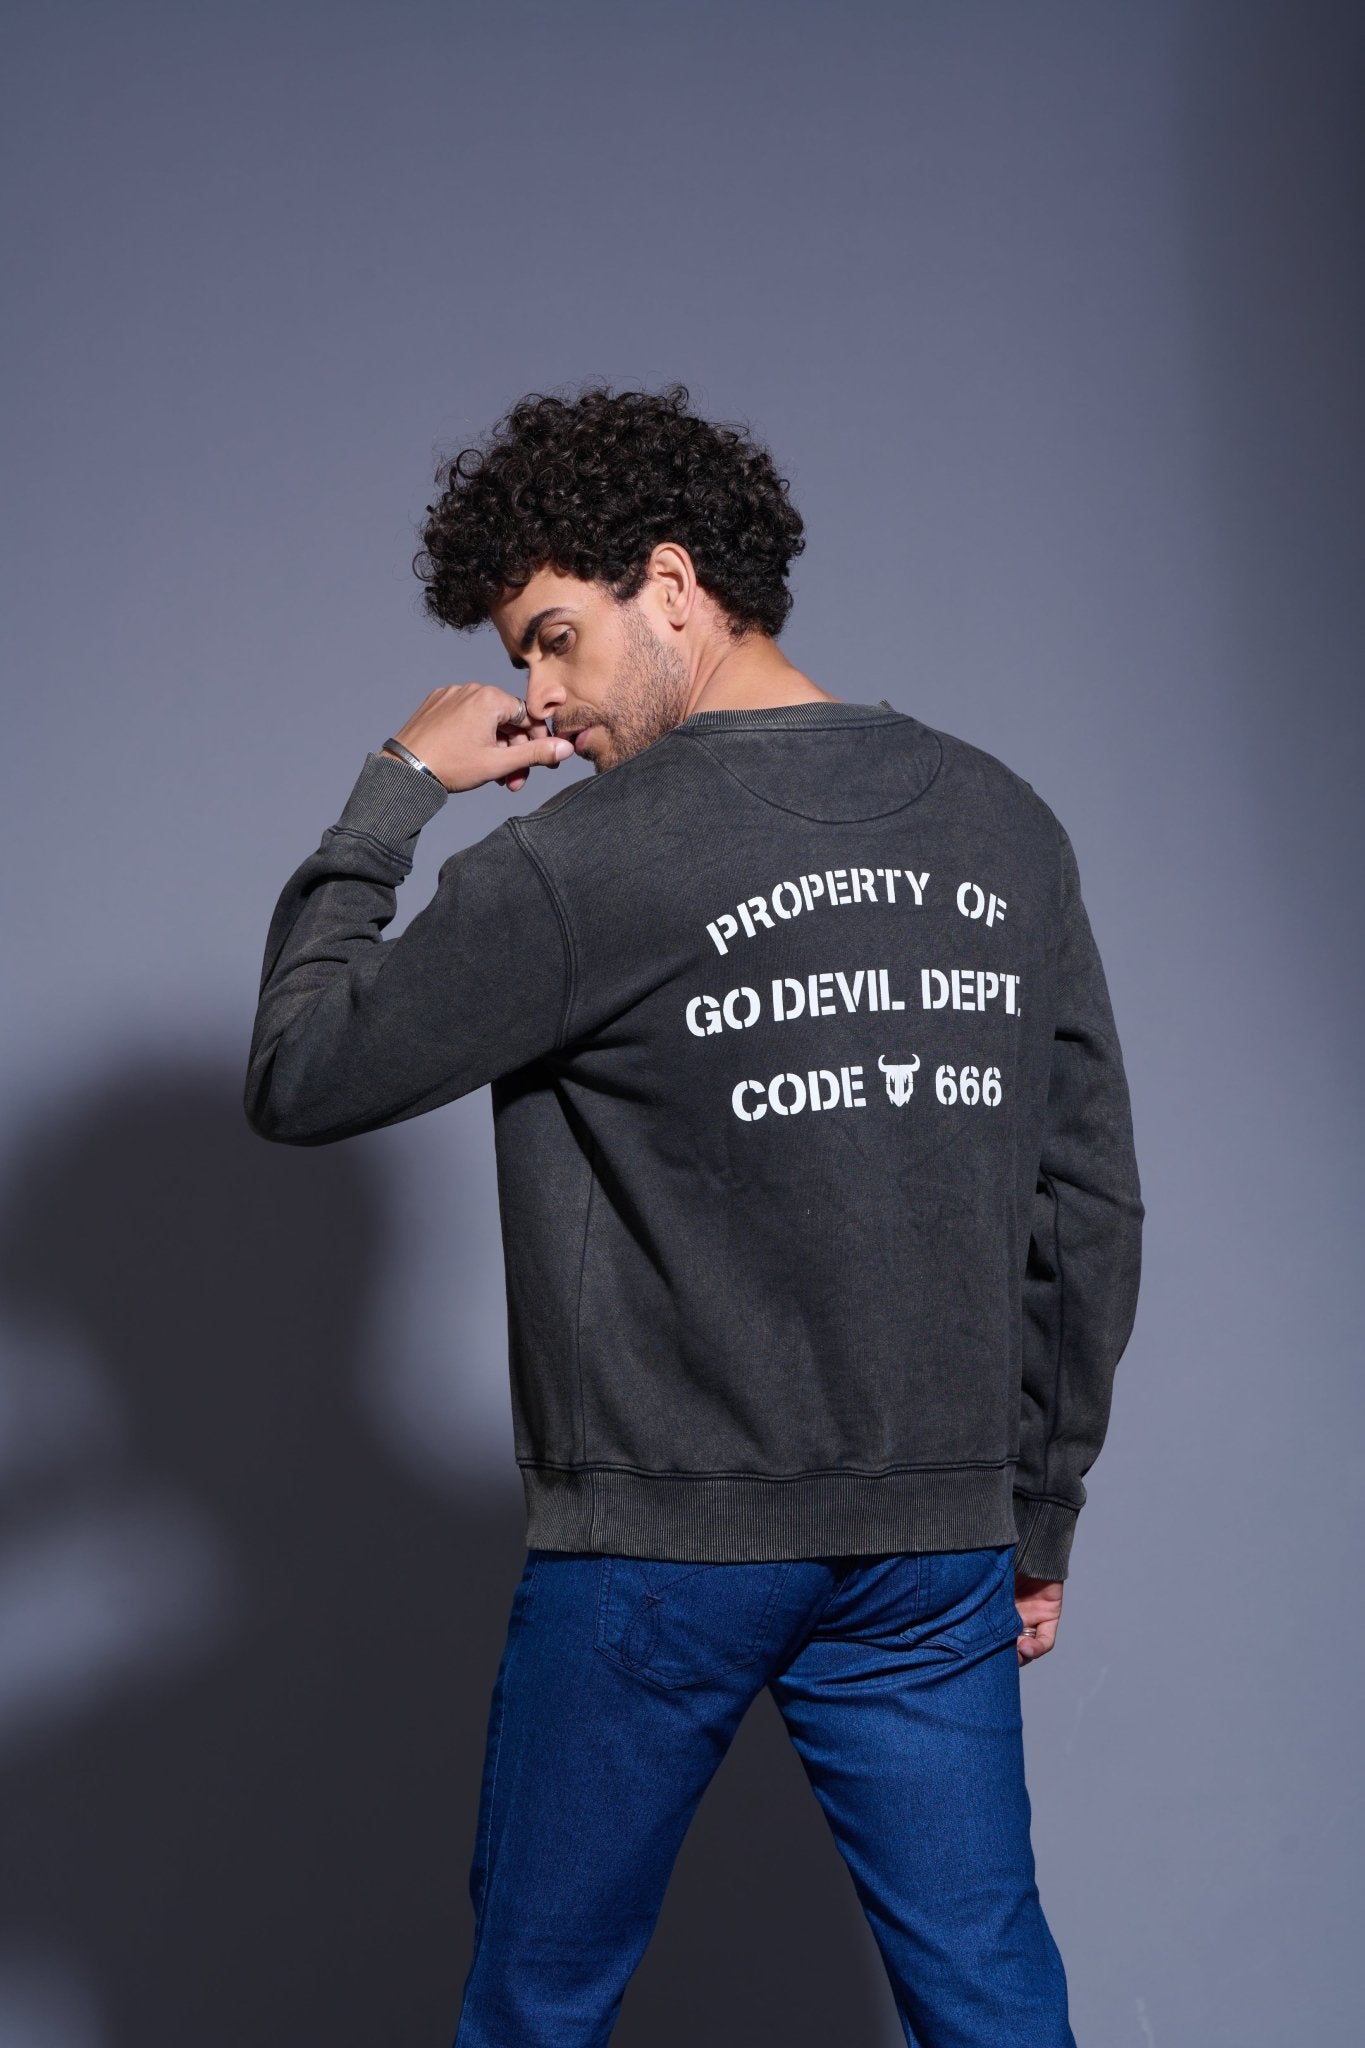 Go Devil Dept. Printed Black Sweatshirt for Men - Go Devil